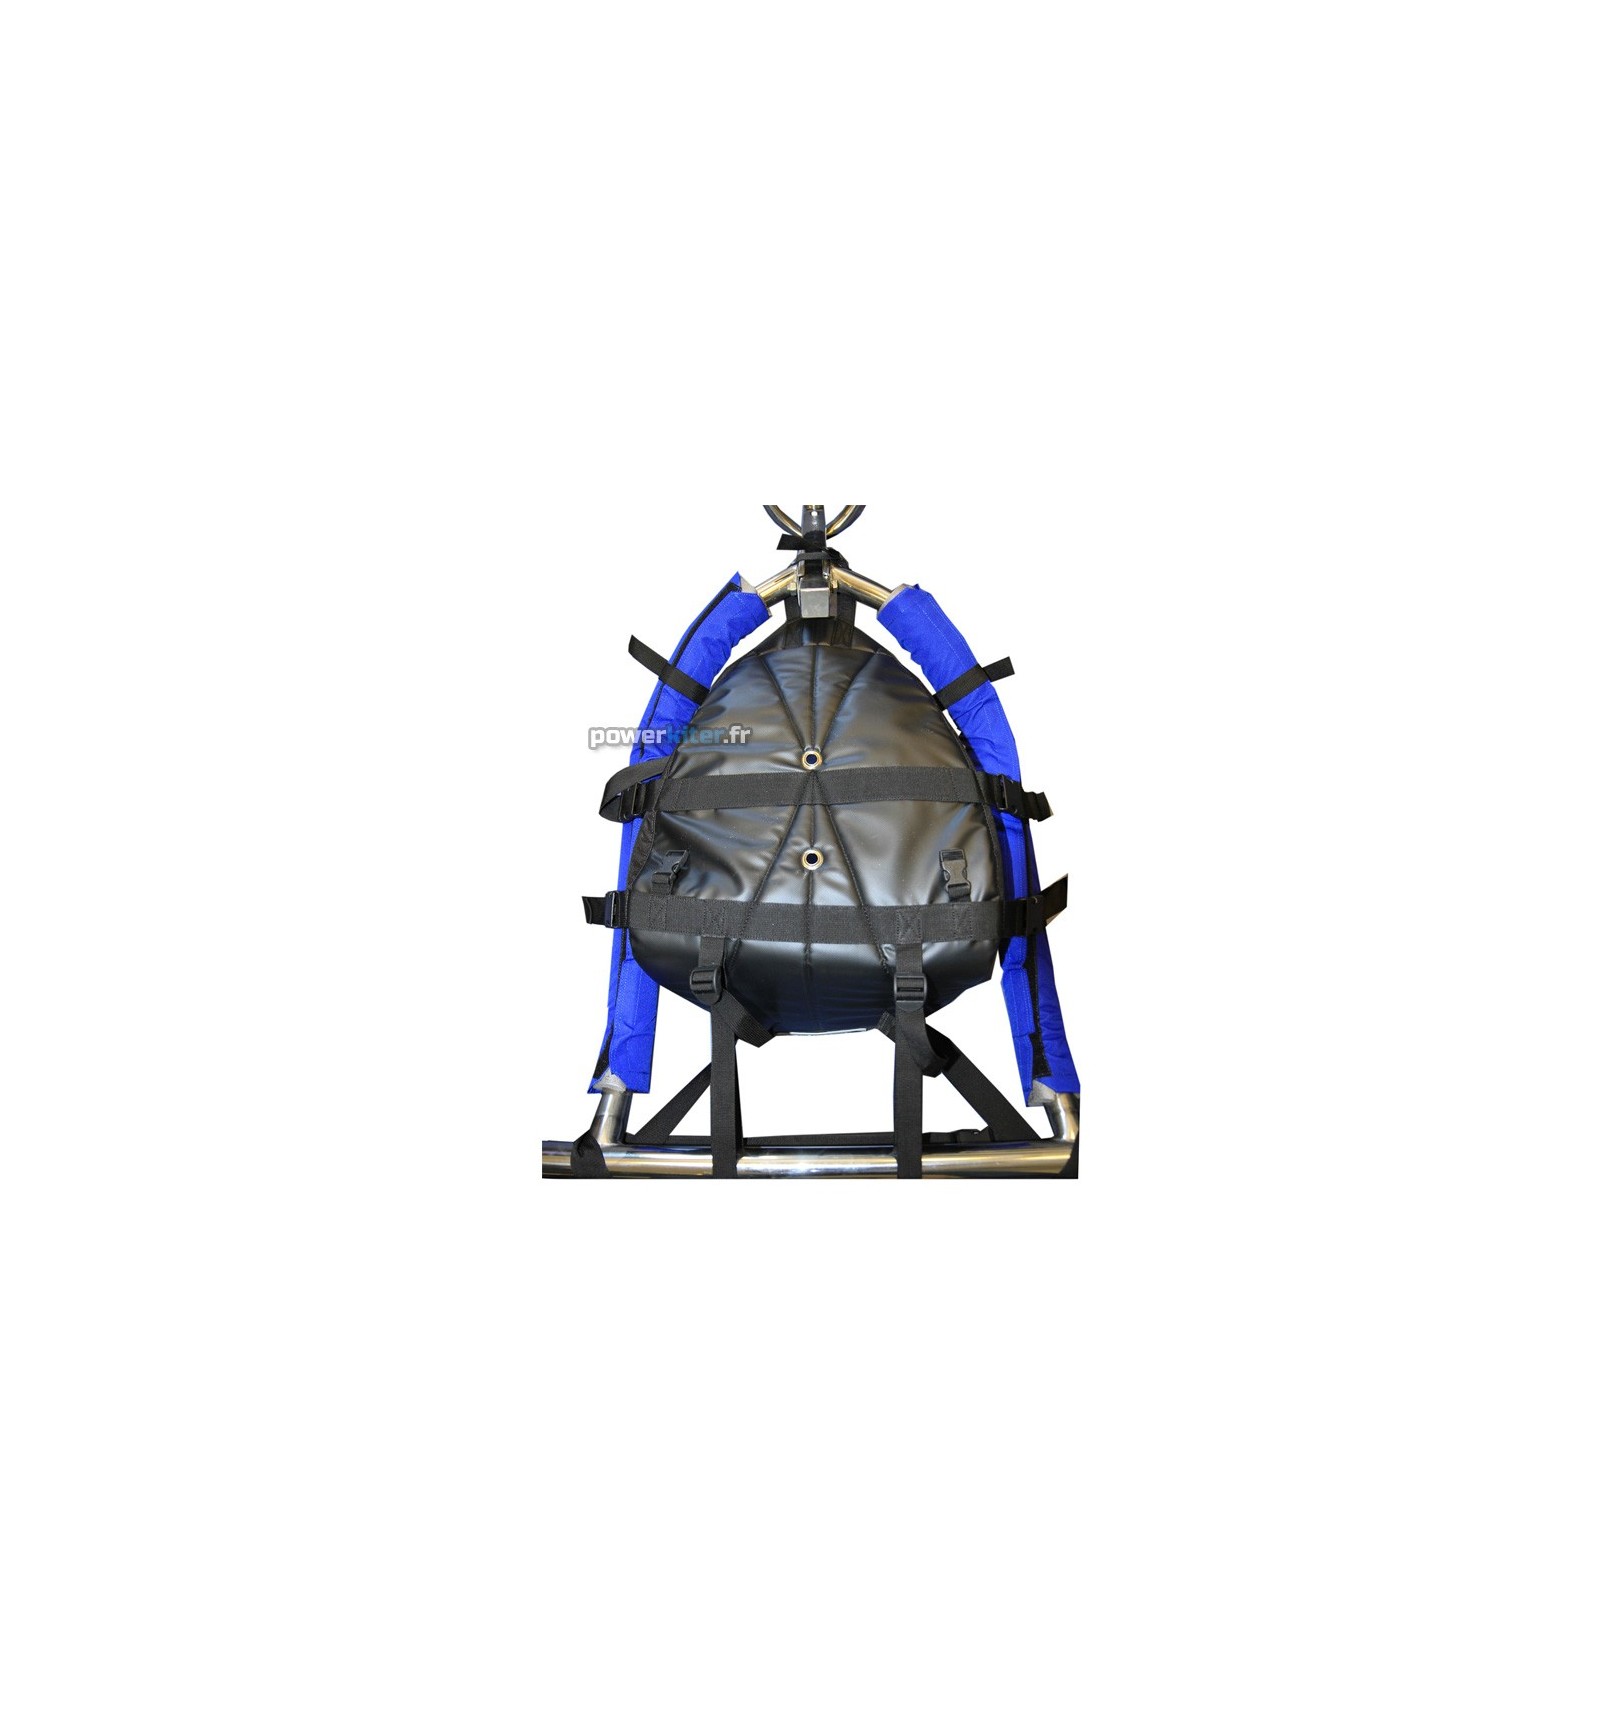 SPACER Roues Peter Lynn - Autres accessoires buggy